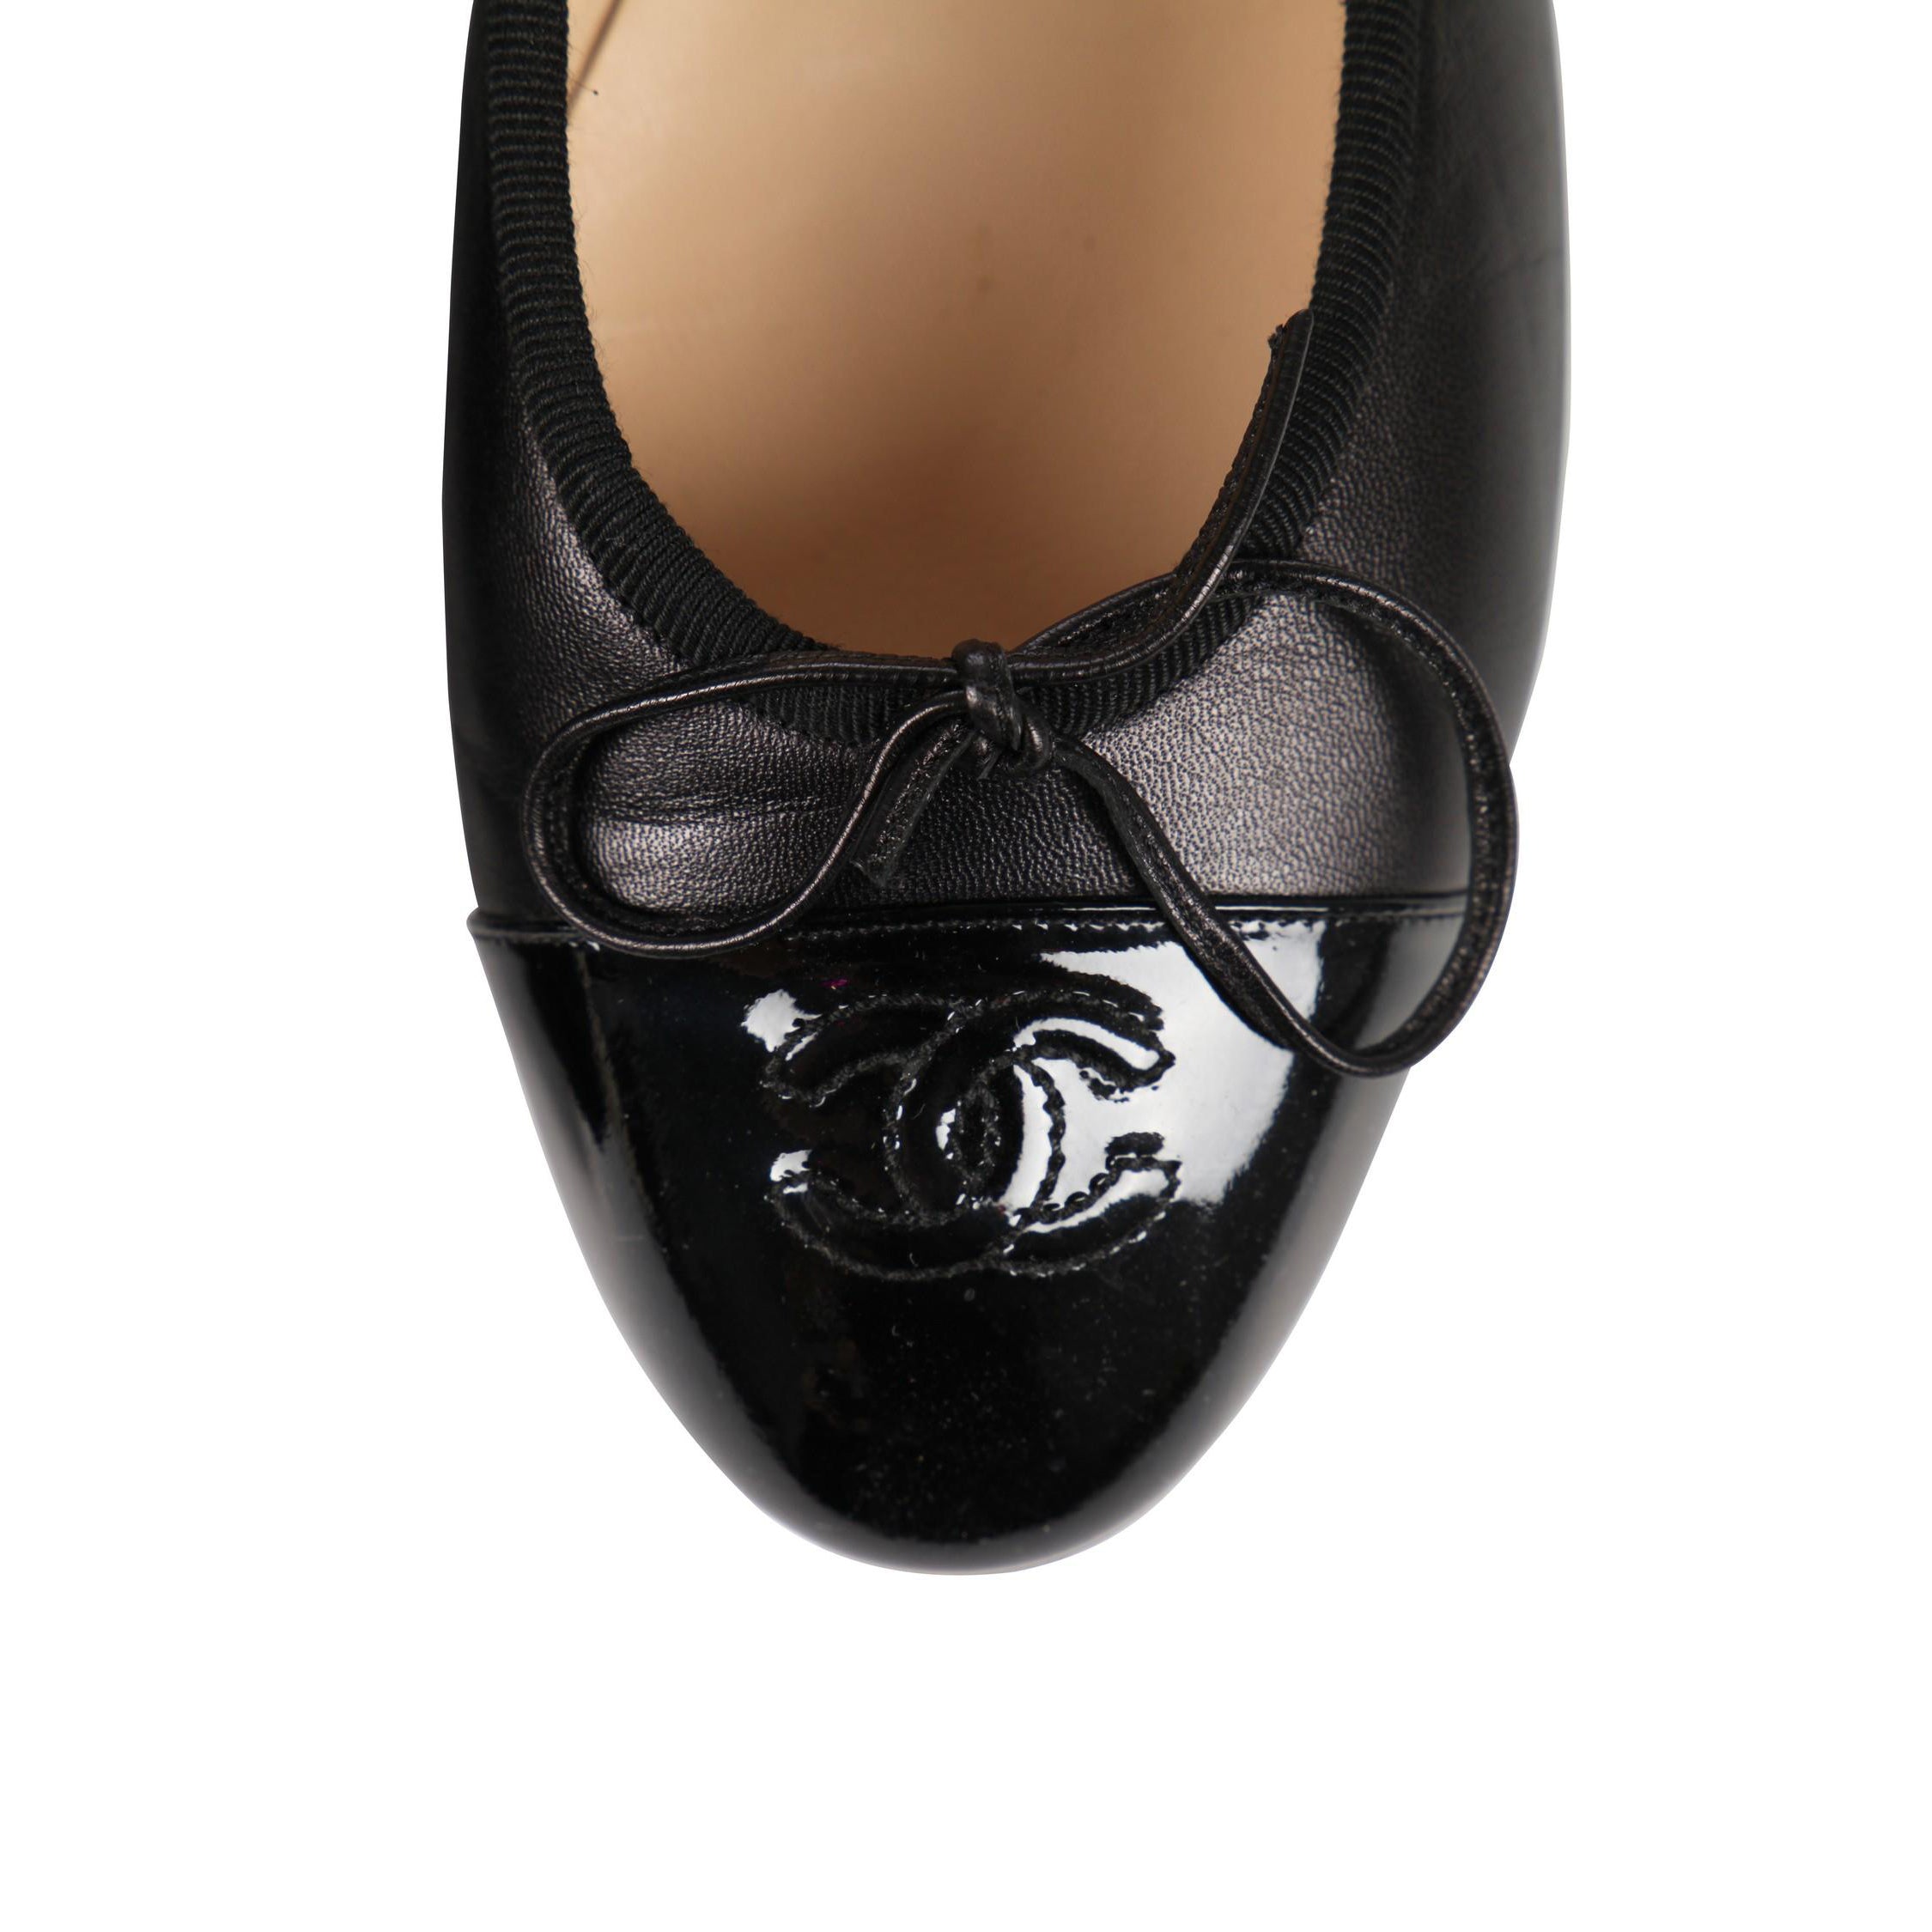 Chanel Black Two-tone Leather Ballet Flats - Size 38.5 EU/ 8.5 US